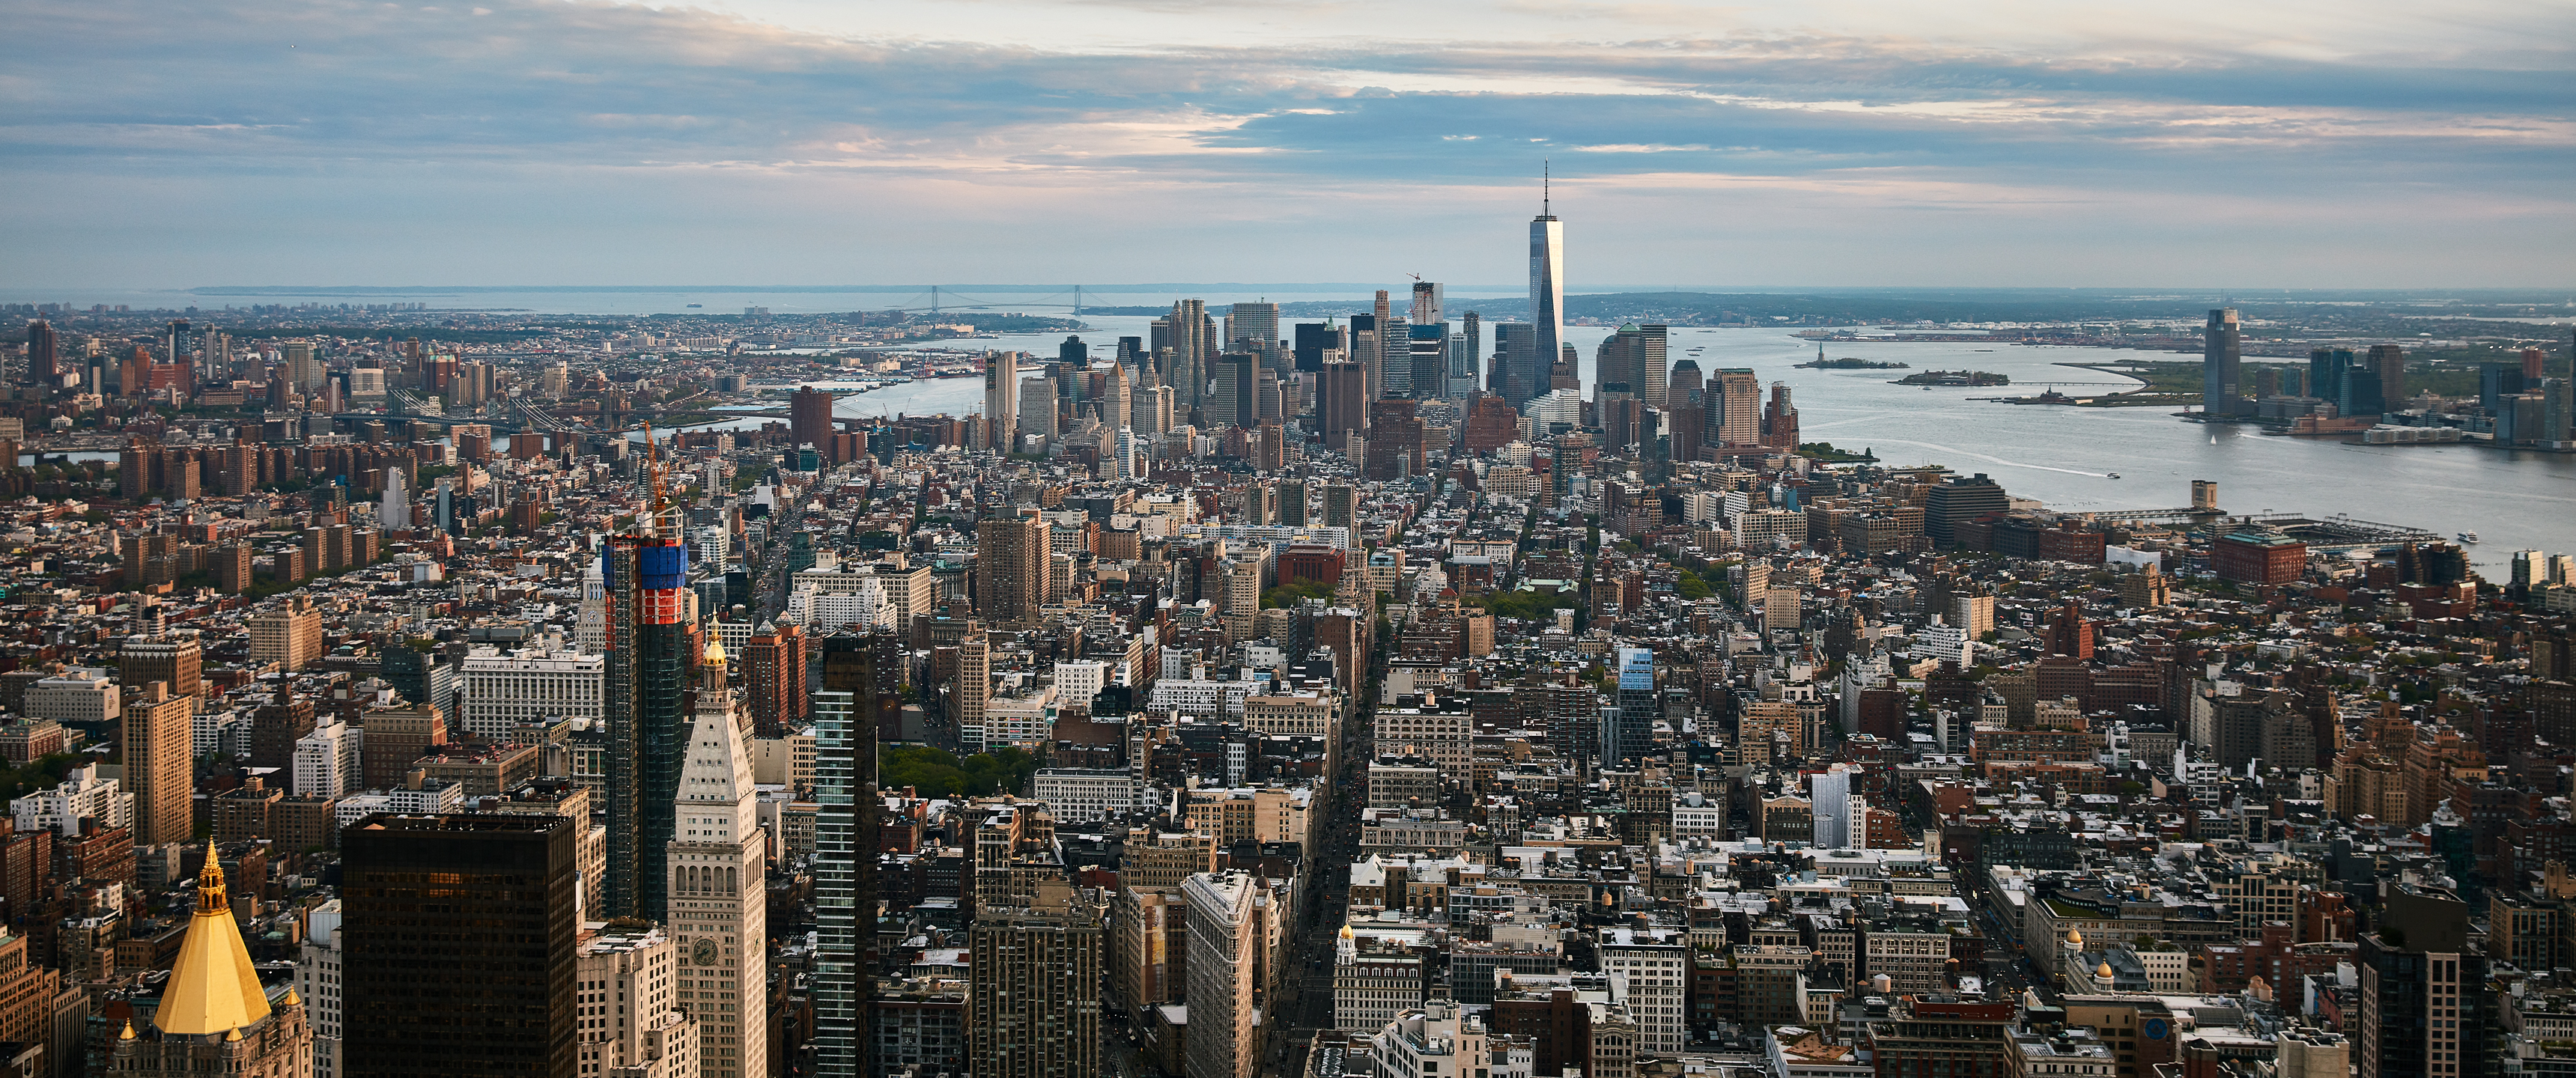 General 3440x1440 city cityscape building skyscraper New York City USA Manhattan One World Trade Center